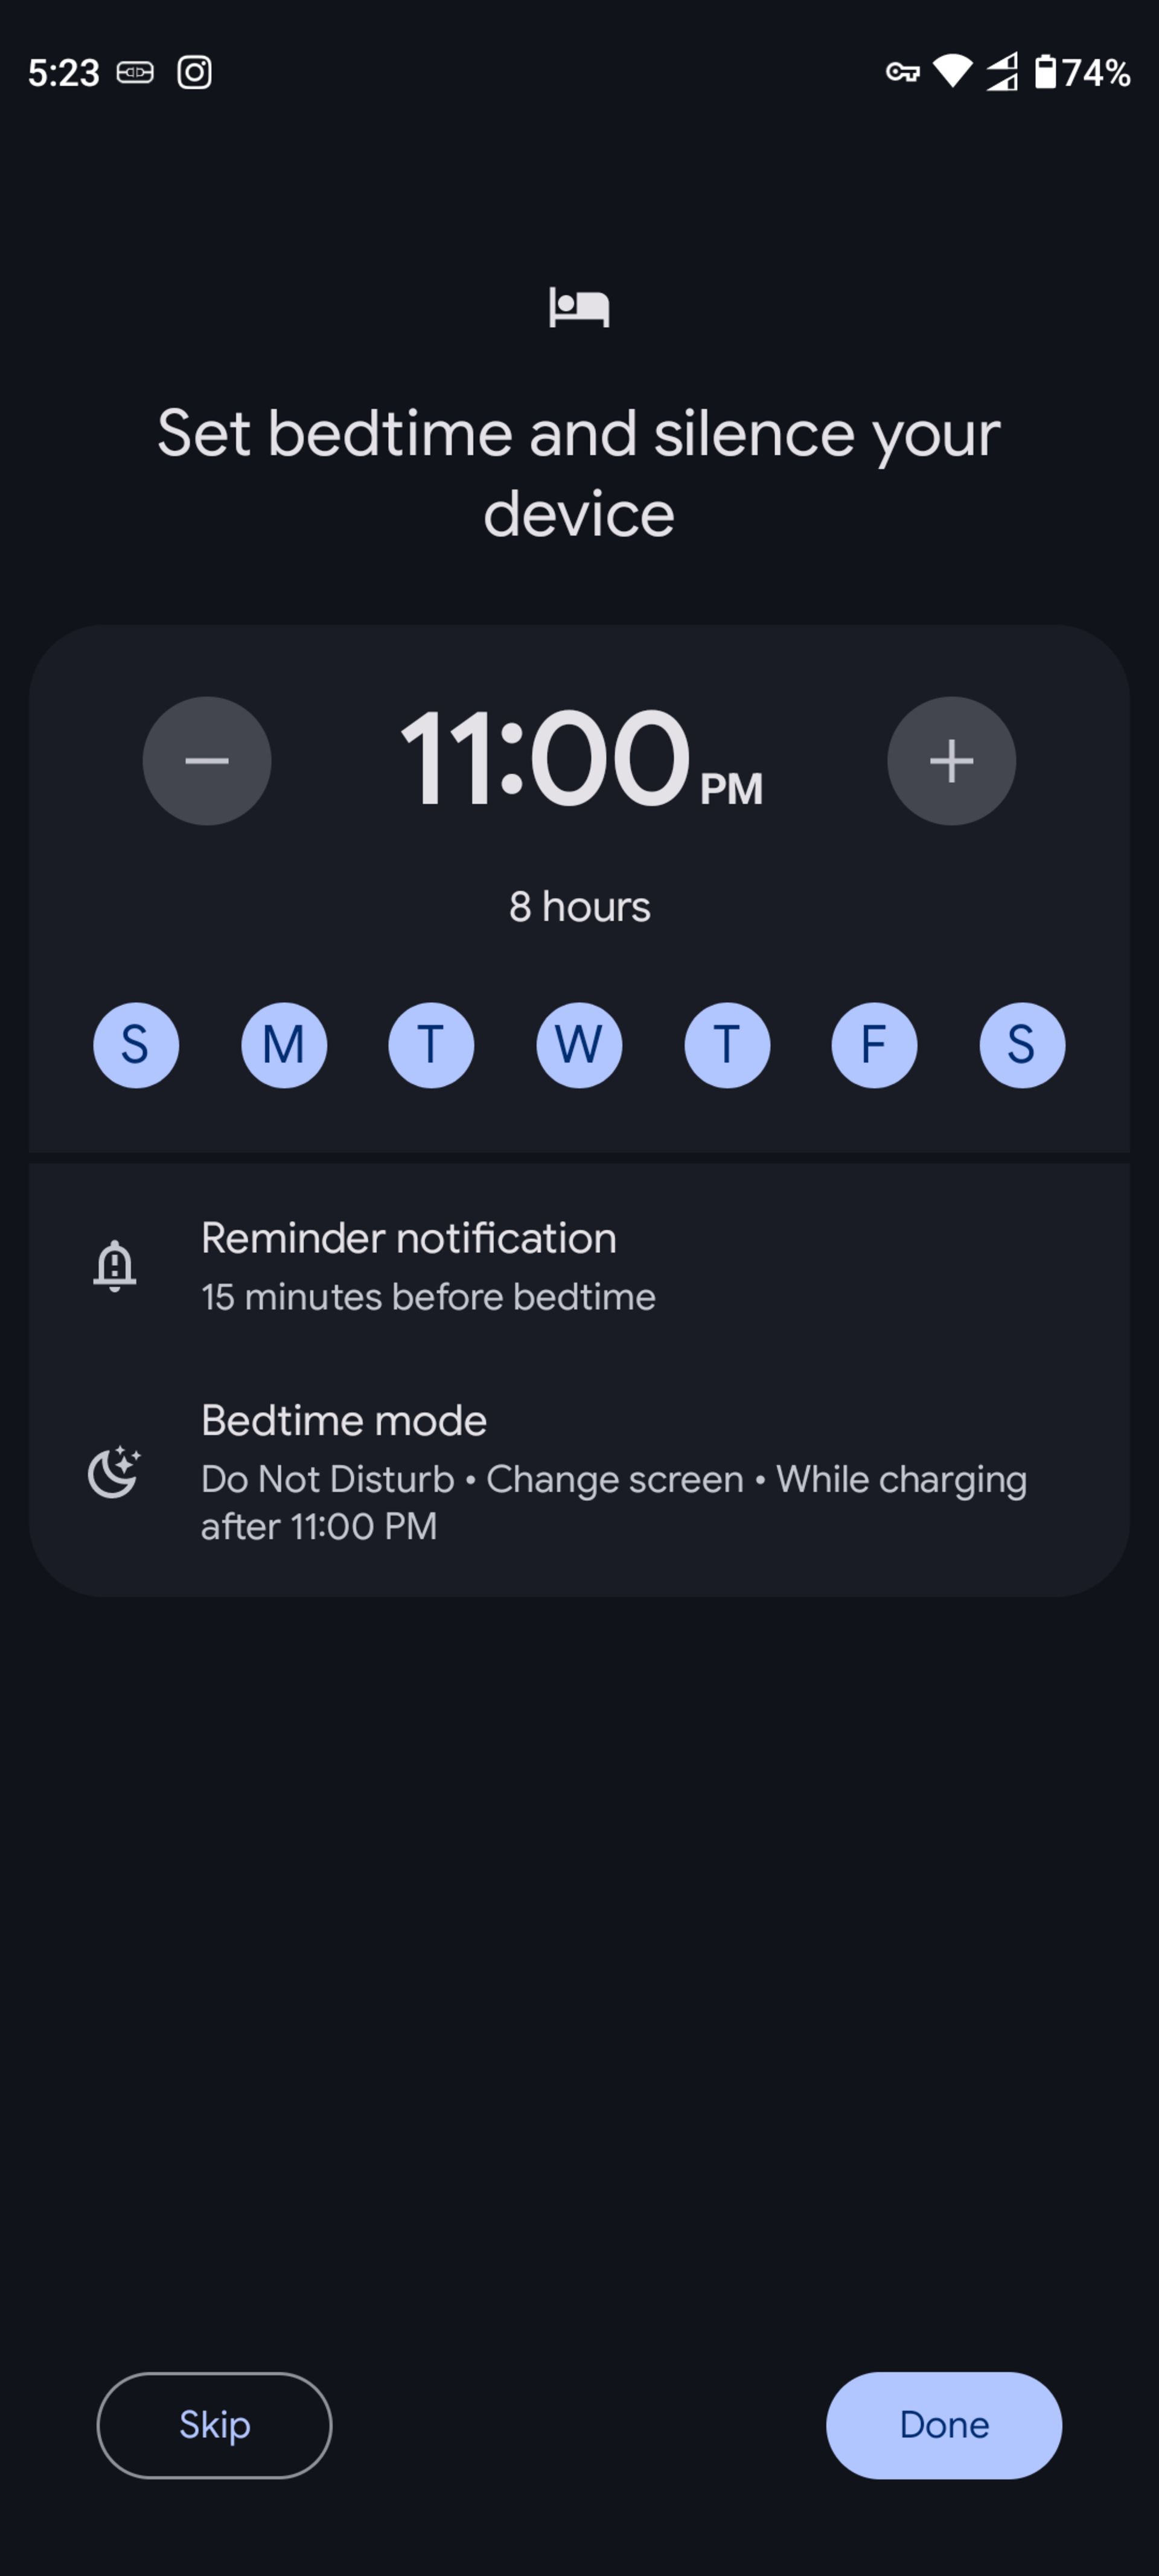 تنظیم زنگ ساعت خواب در حالت bedtime ساعت گوگل (google clock)